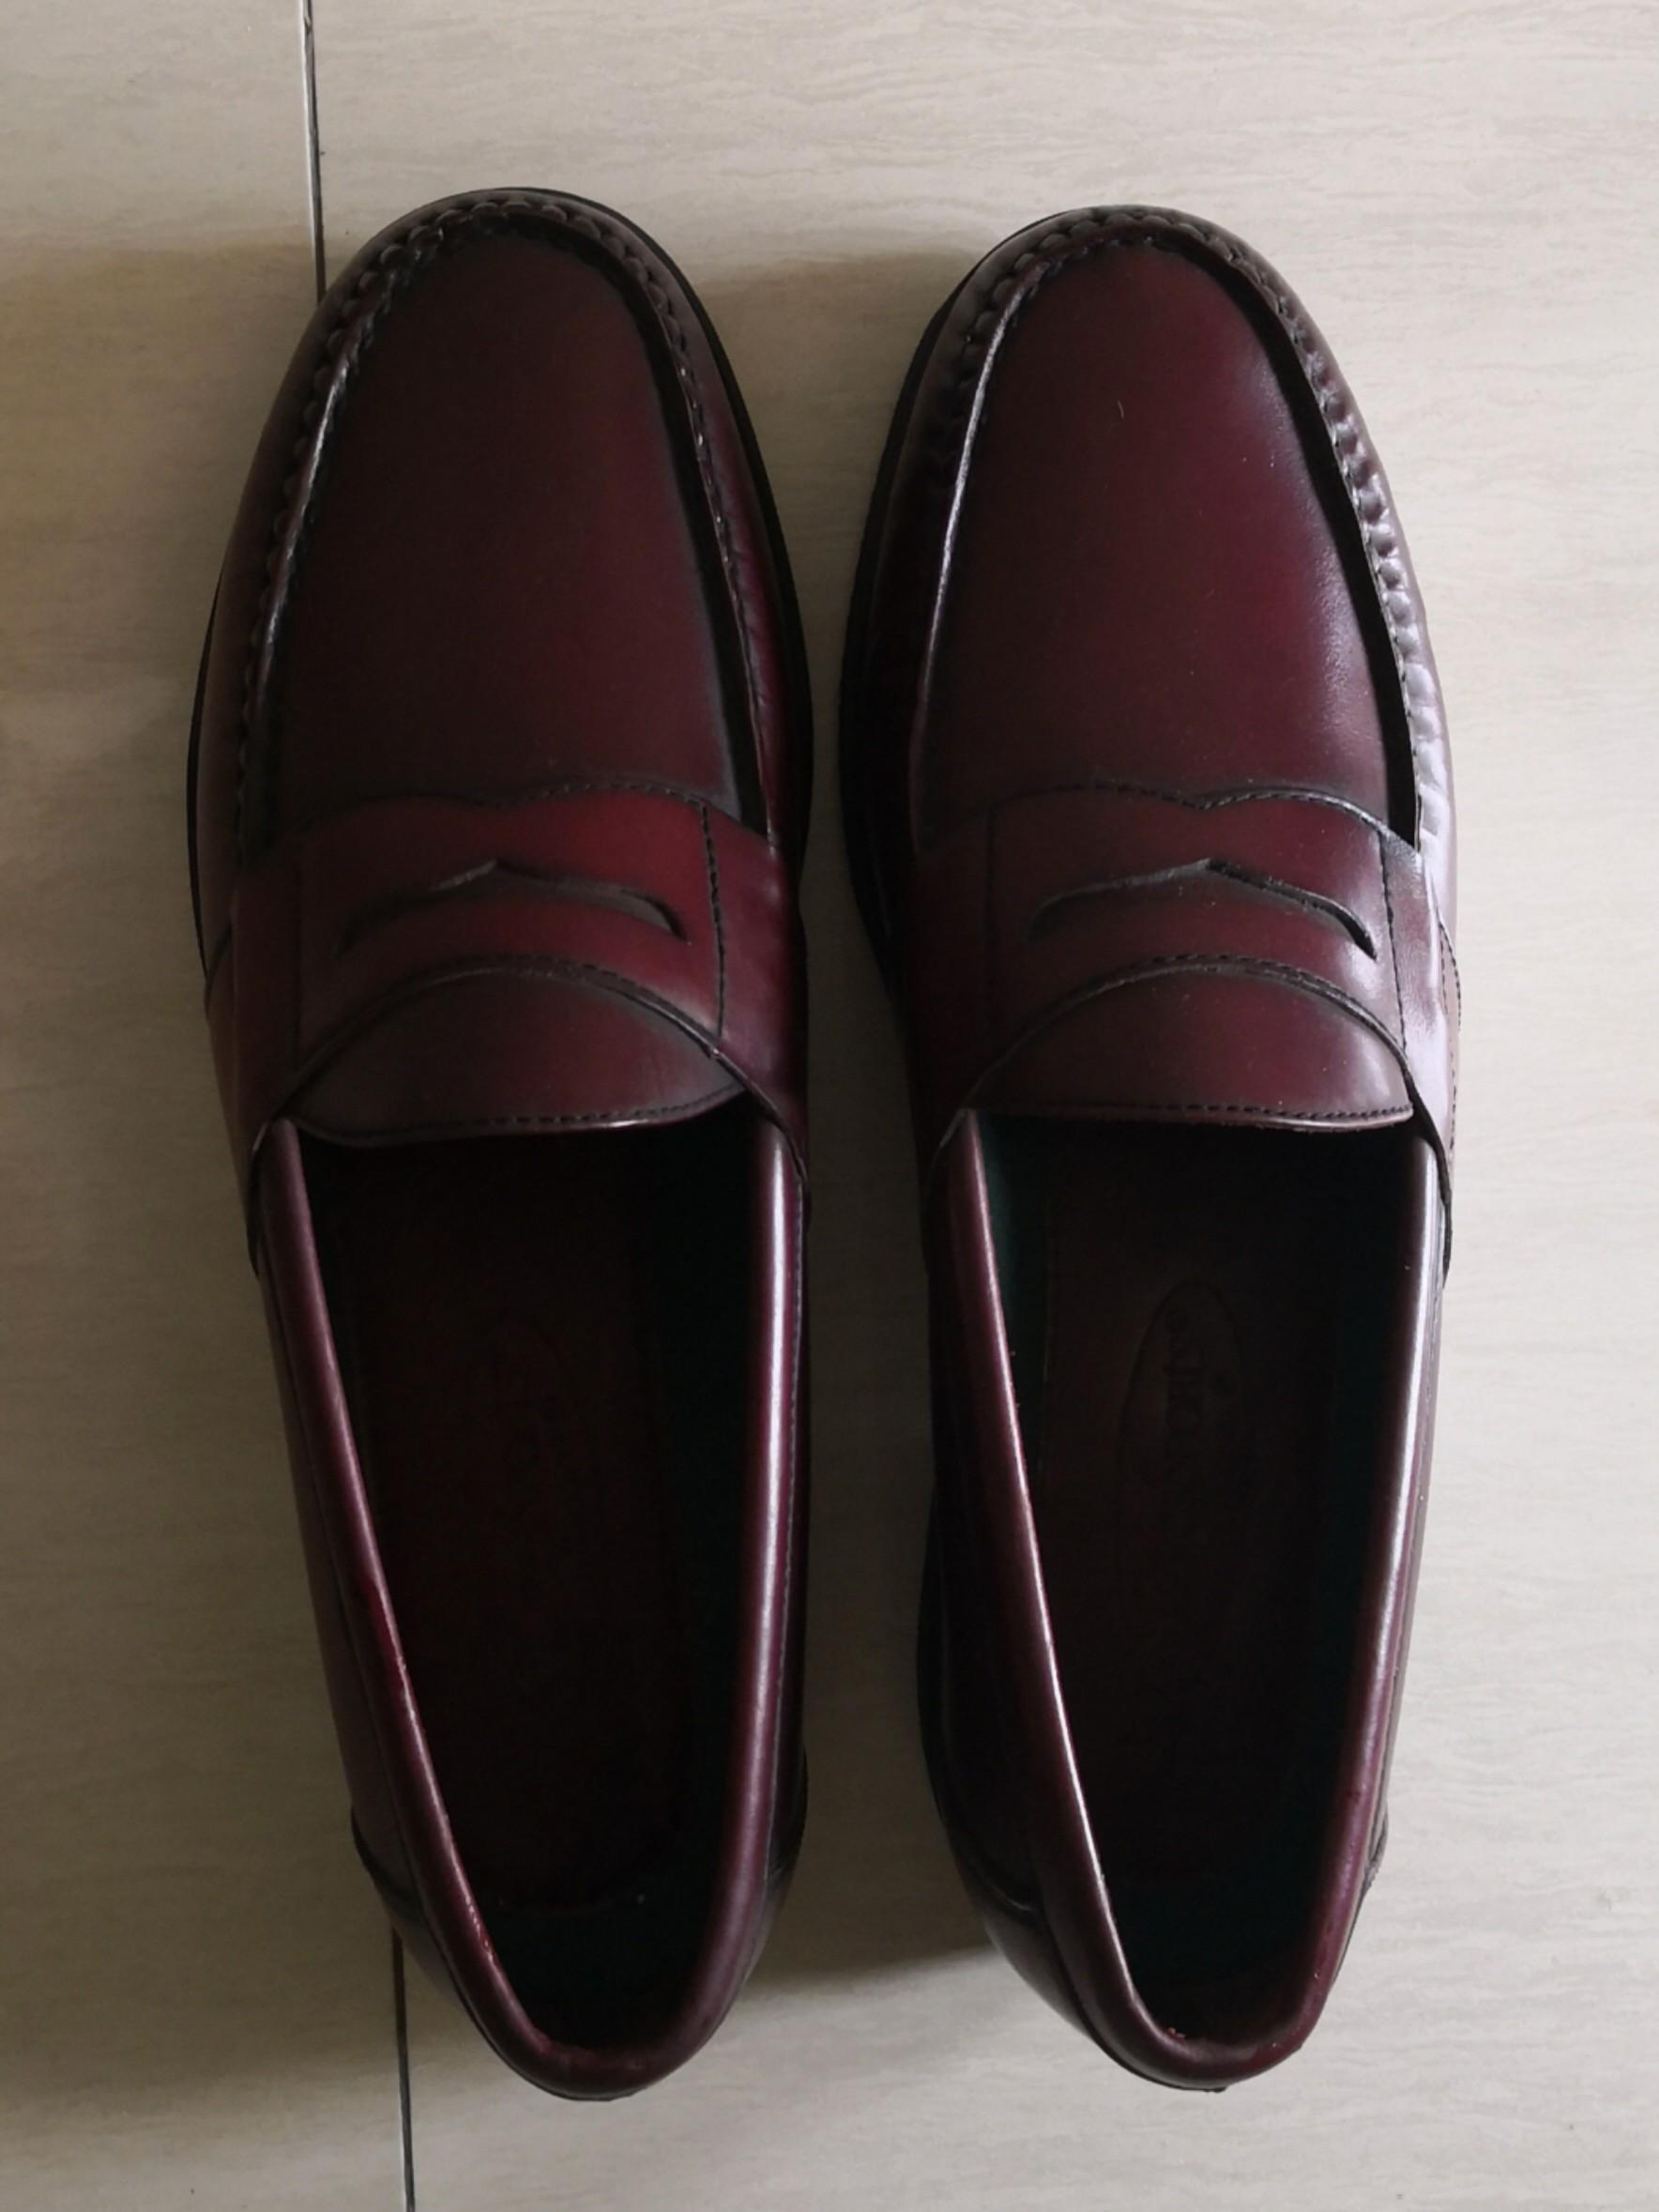 burgundy color shoe